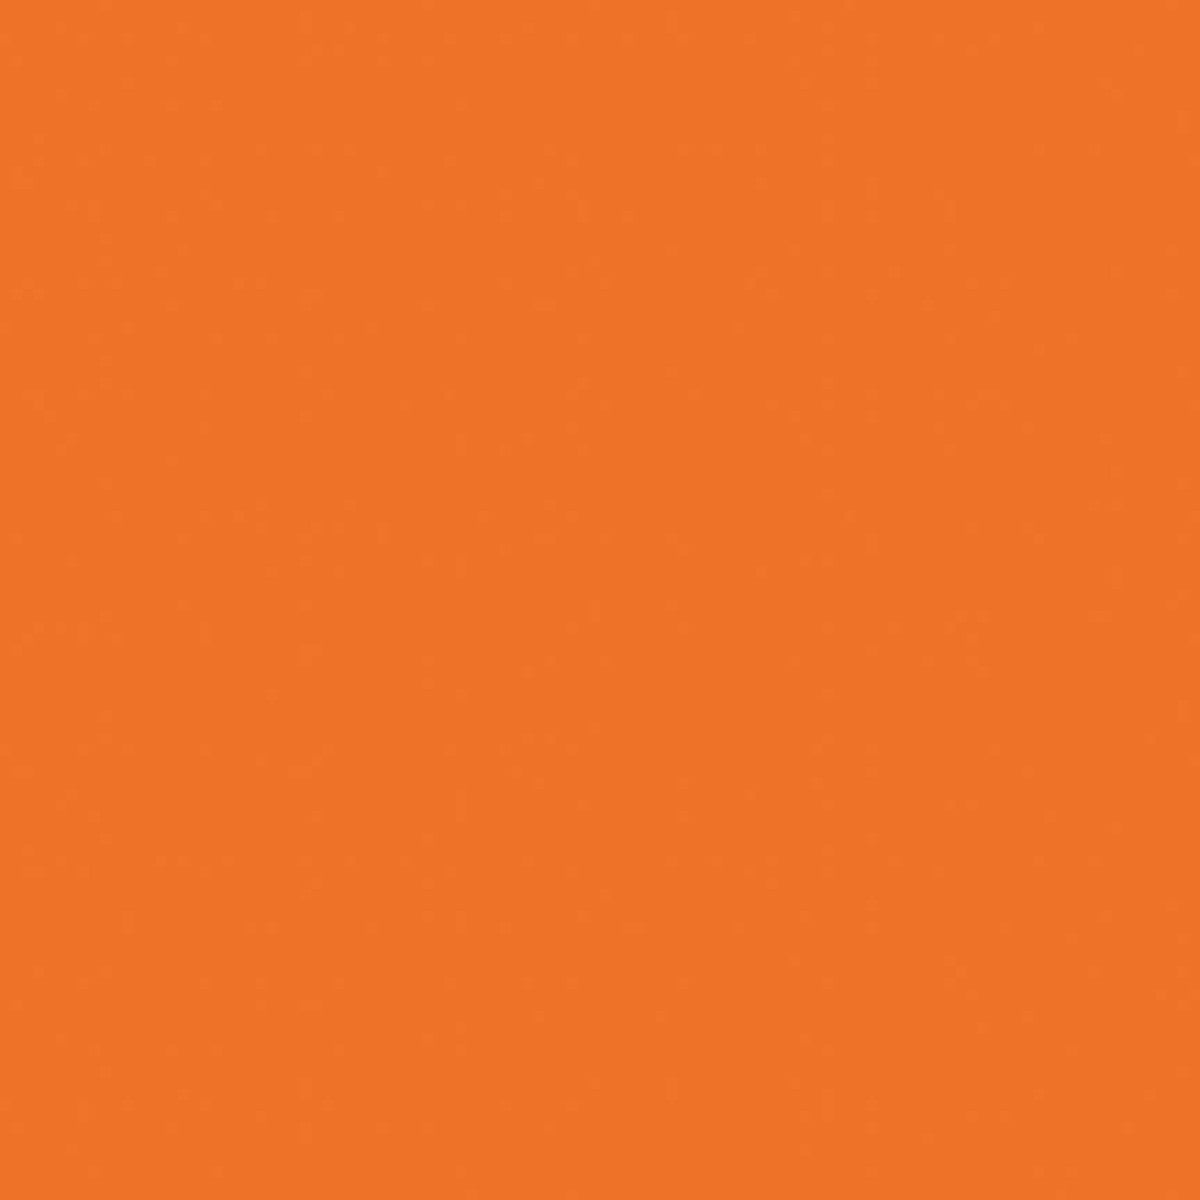 Riley Orange Color, Ref. C120-RILEYORANGE, Confetti Cottons -- 100% Fine Cotton Solids Collection   by Riley Blake Designs®